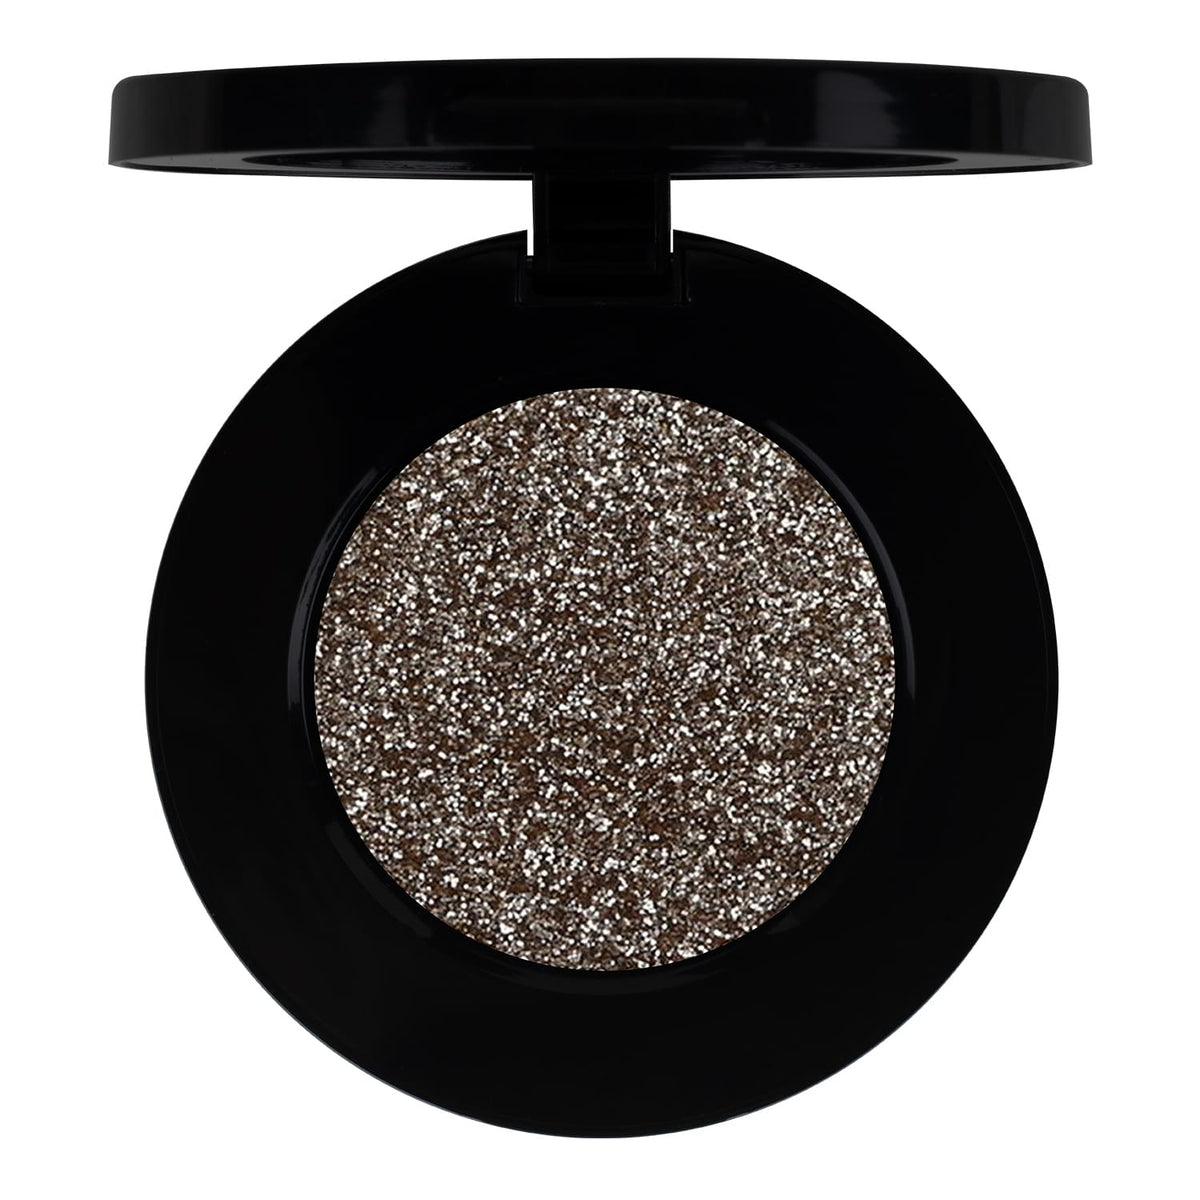 PAC Pressed Glitter Eyeshadow - 05 (Silver Chrome) PAC